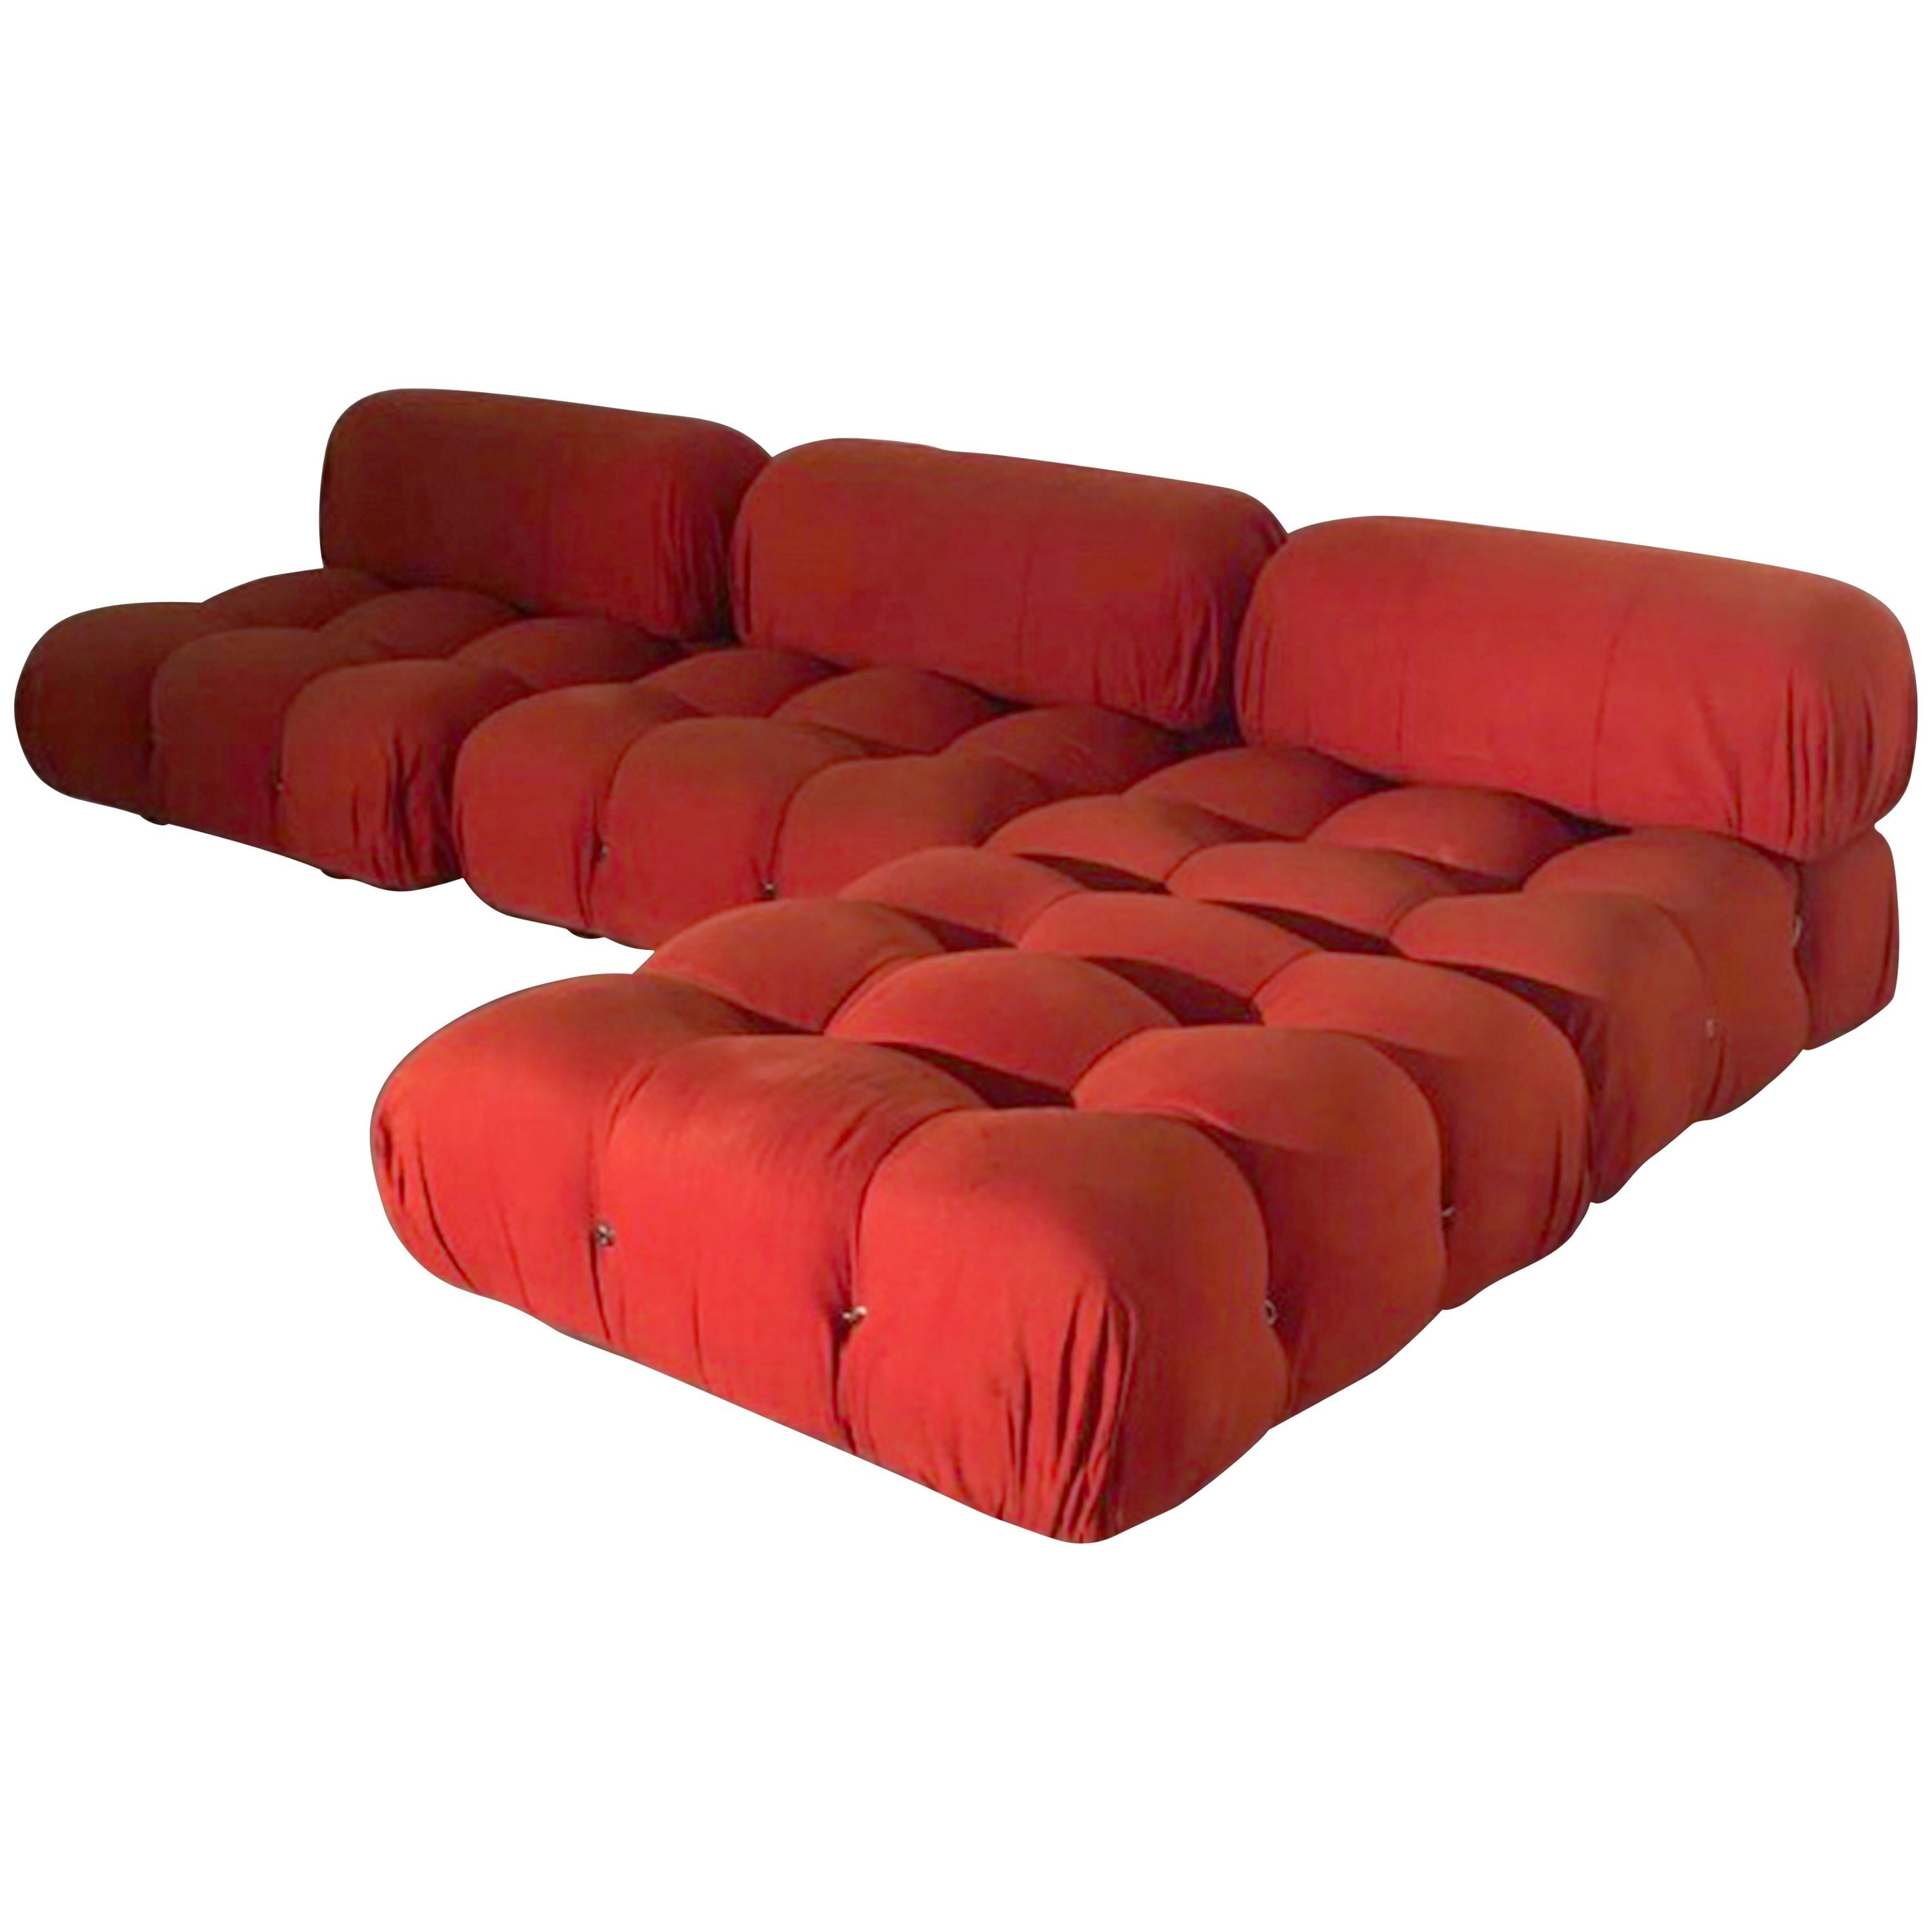 Mario Bellini B&B Italia, Camaleonda Sofa Set in Orange Upholstery, 1970